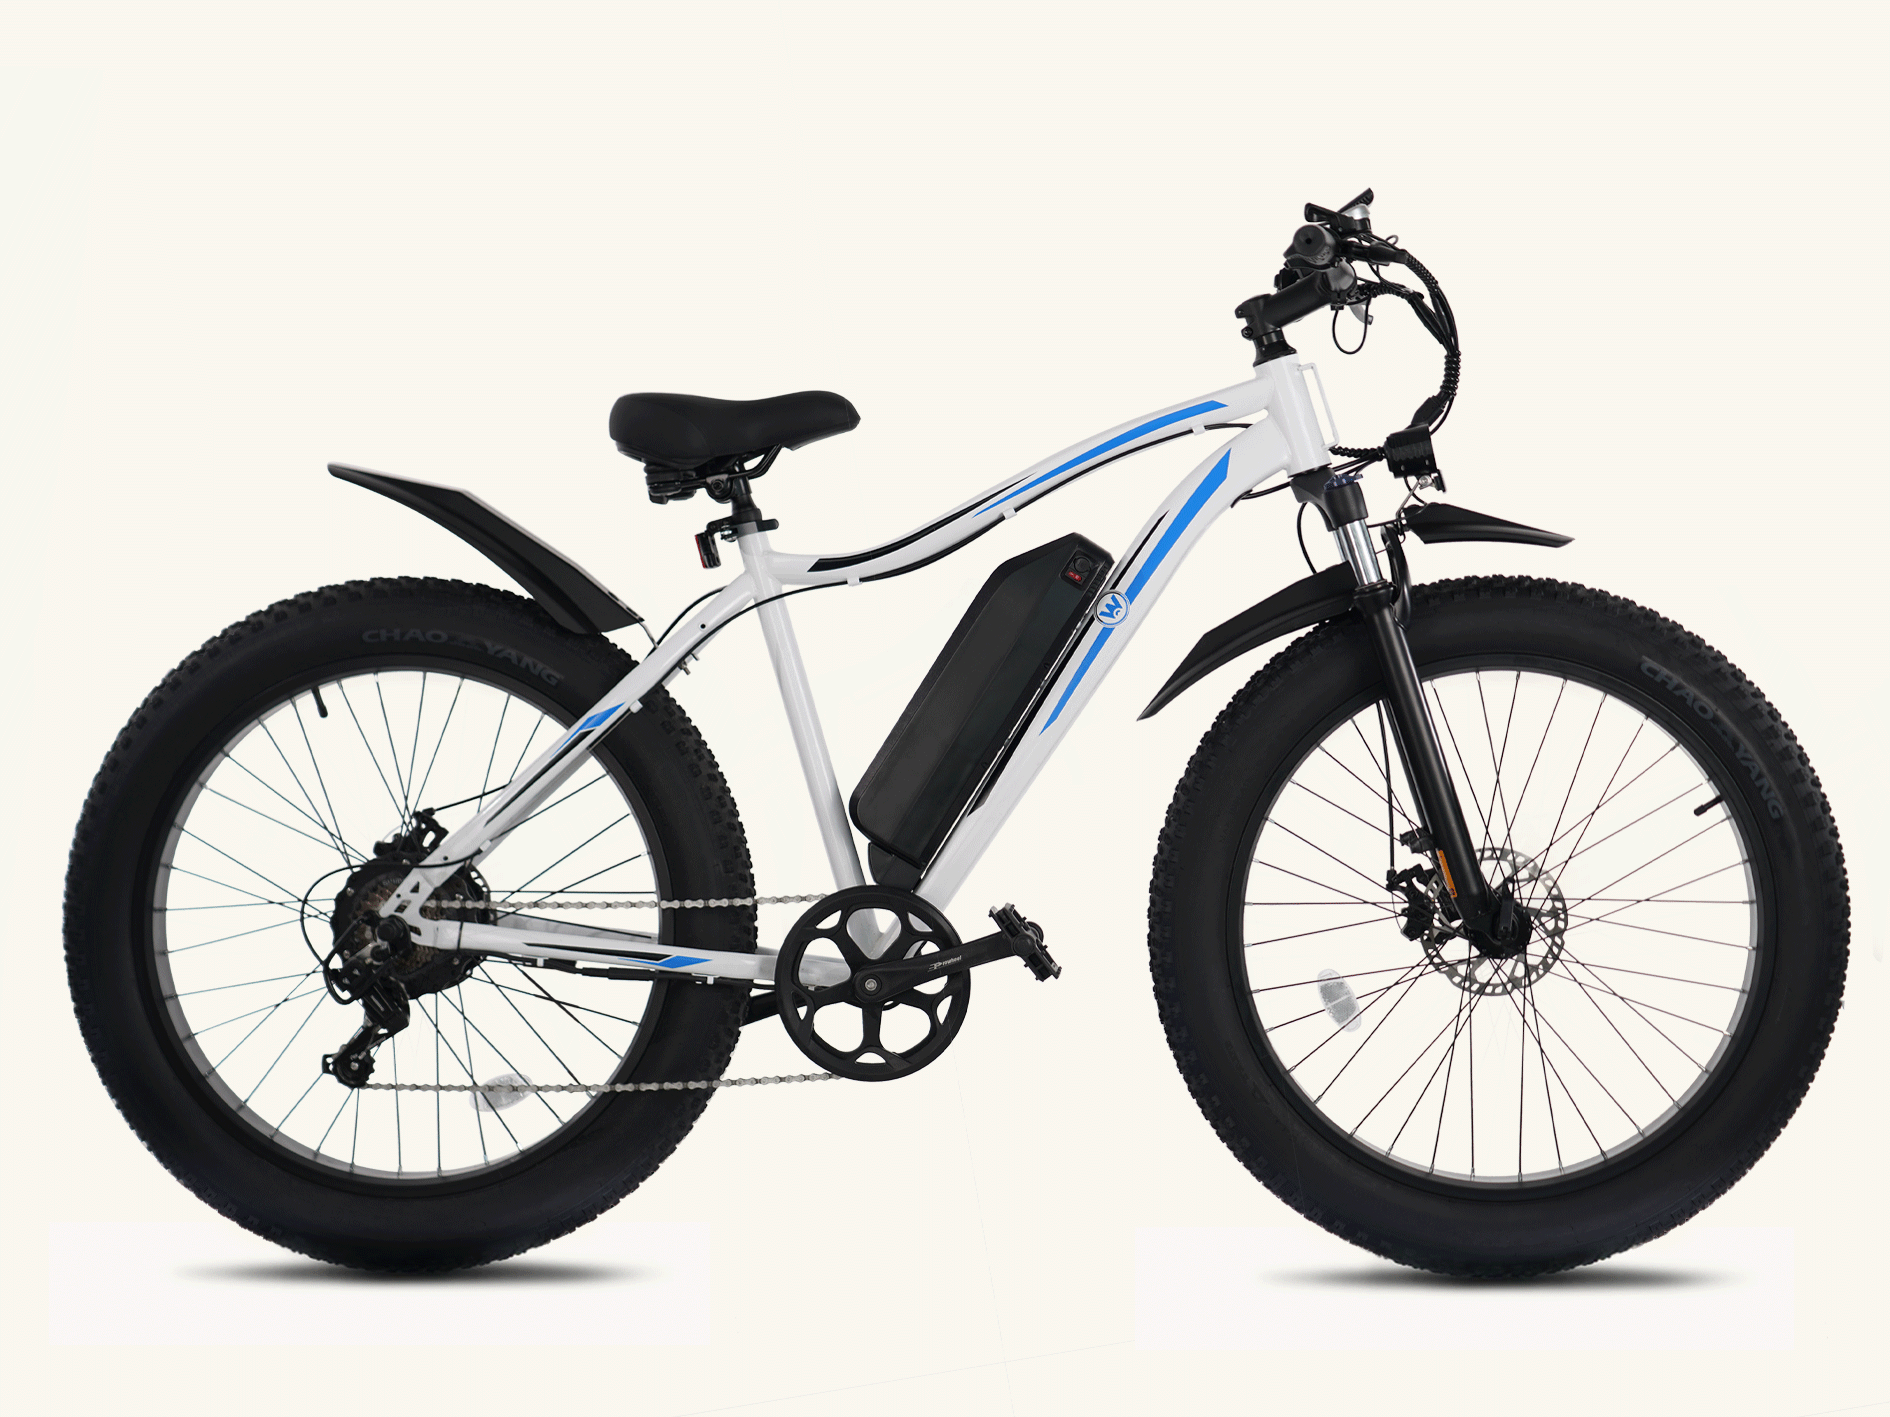 Premium TAURUS Long Range All-terrain Fat Tires Electric Bike 26" Cruiser Detachable Battery Pack